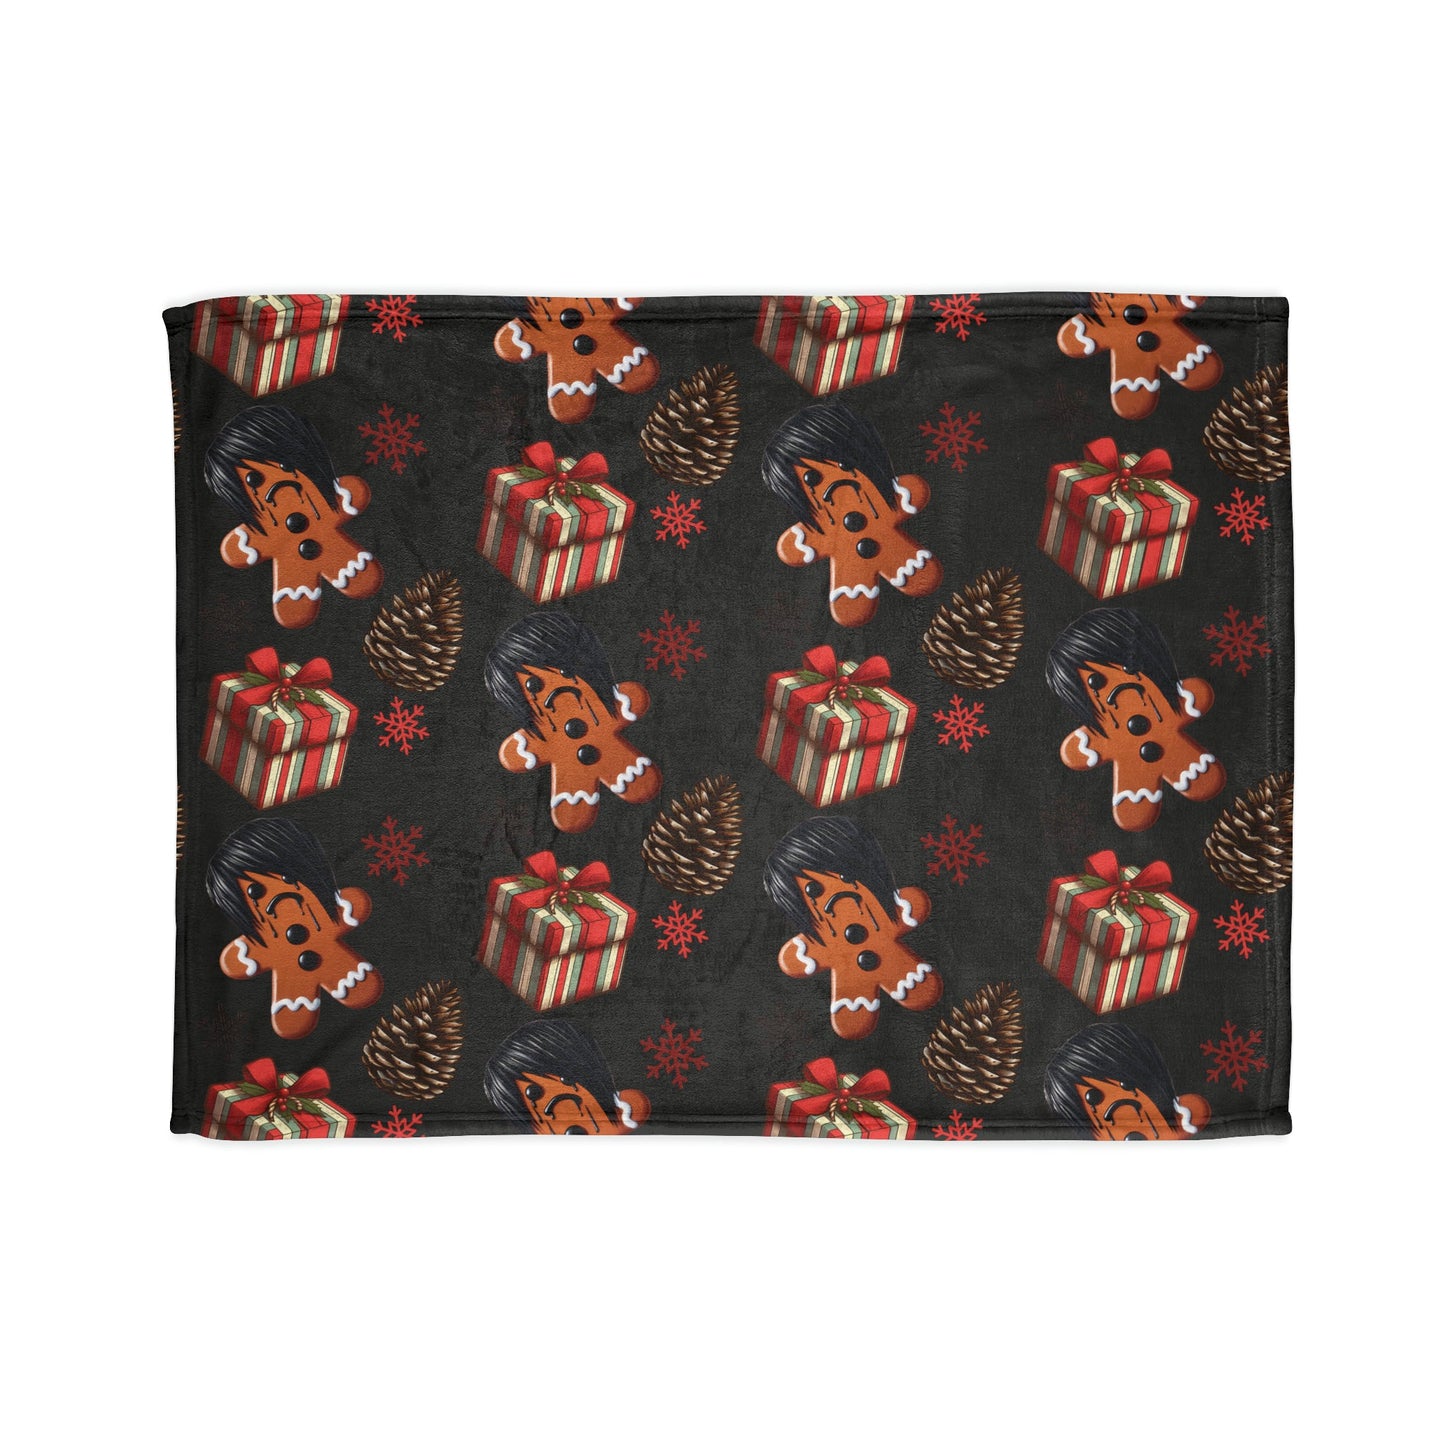 Emo Gingerbread Man BlanketHome DecorVTZdesigns50" × 60"BedBeddingBlankets